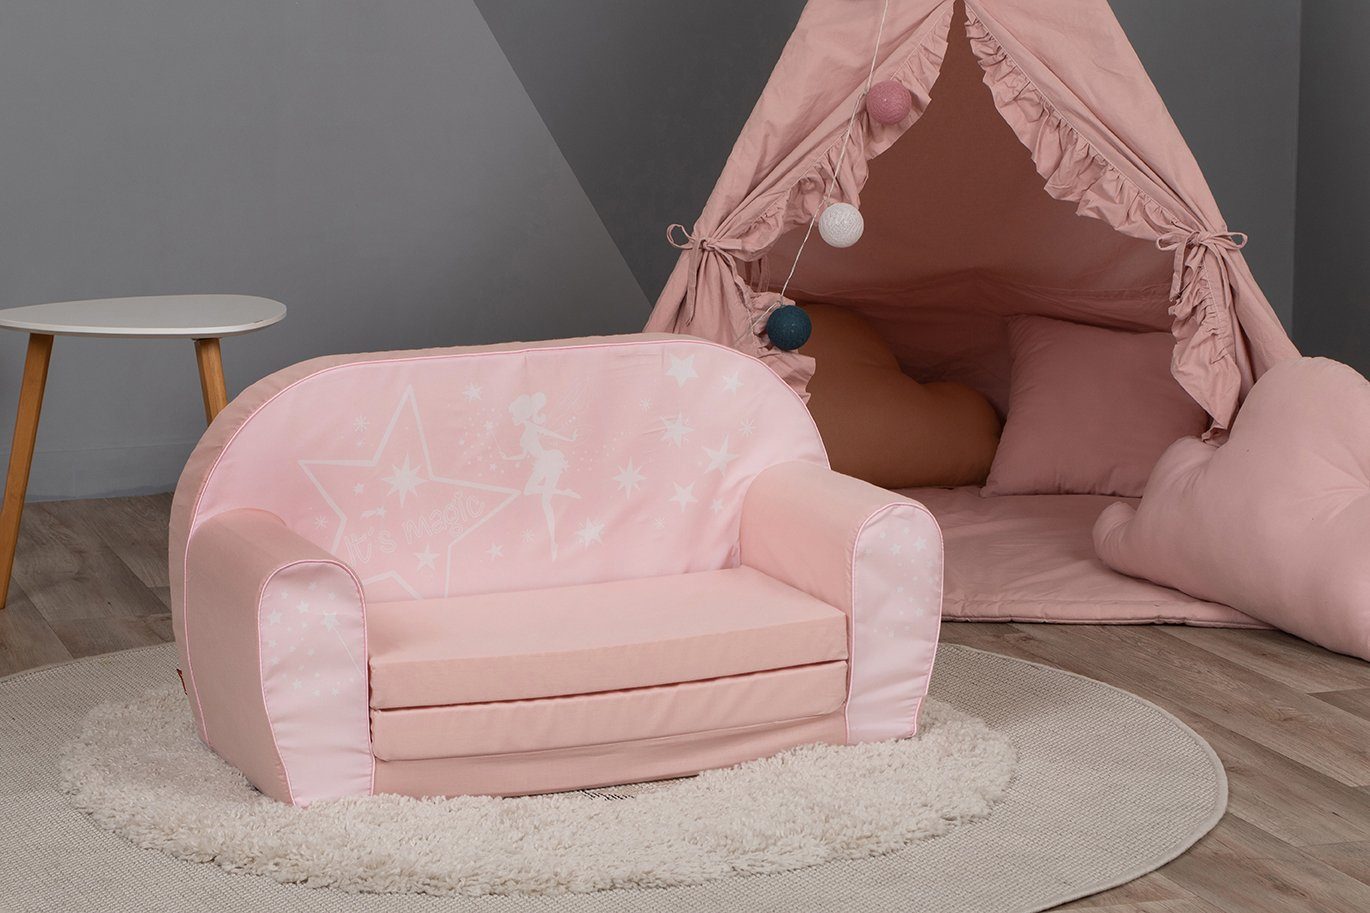 Kinder; Fairy in Knorrtoys® Sofa für Europe Made Pink,